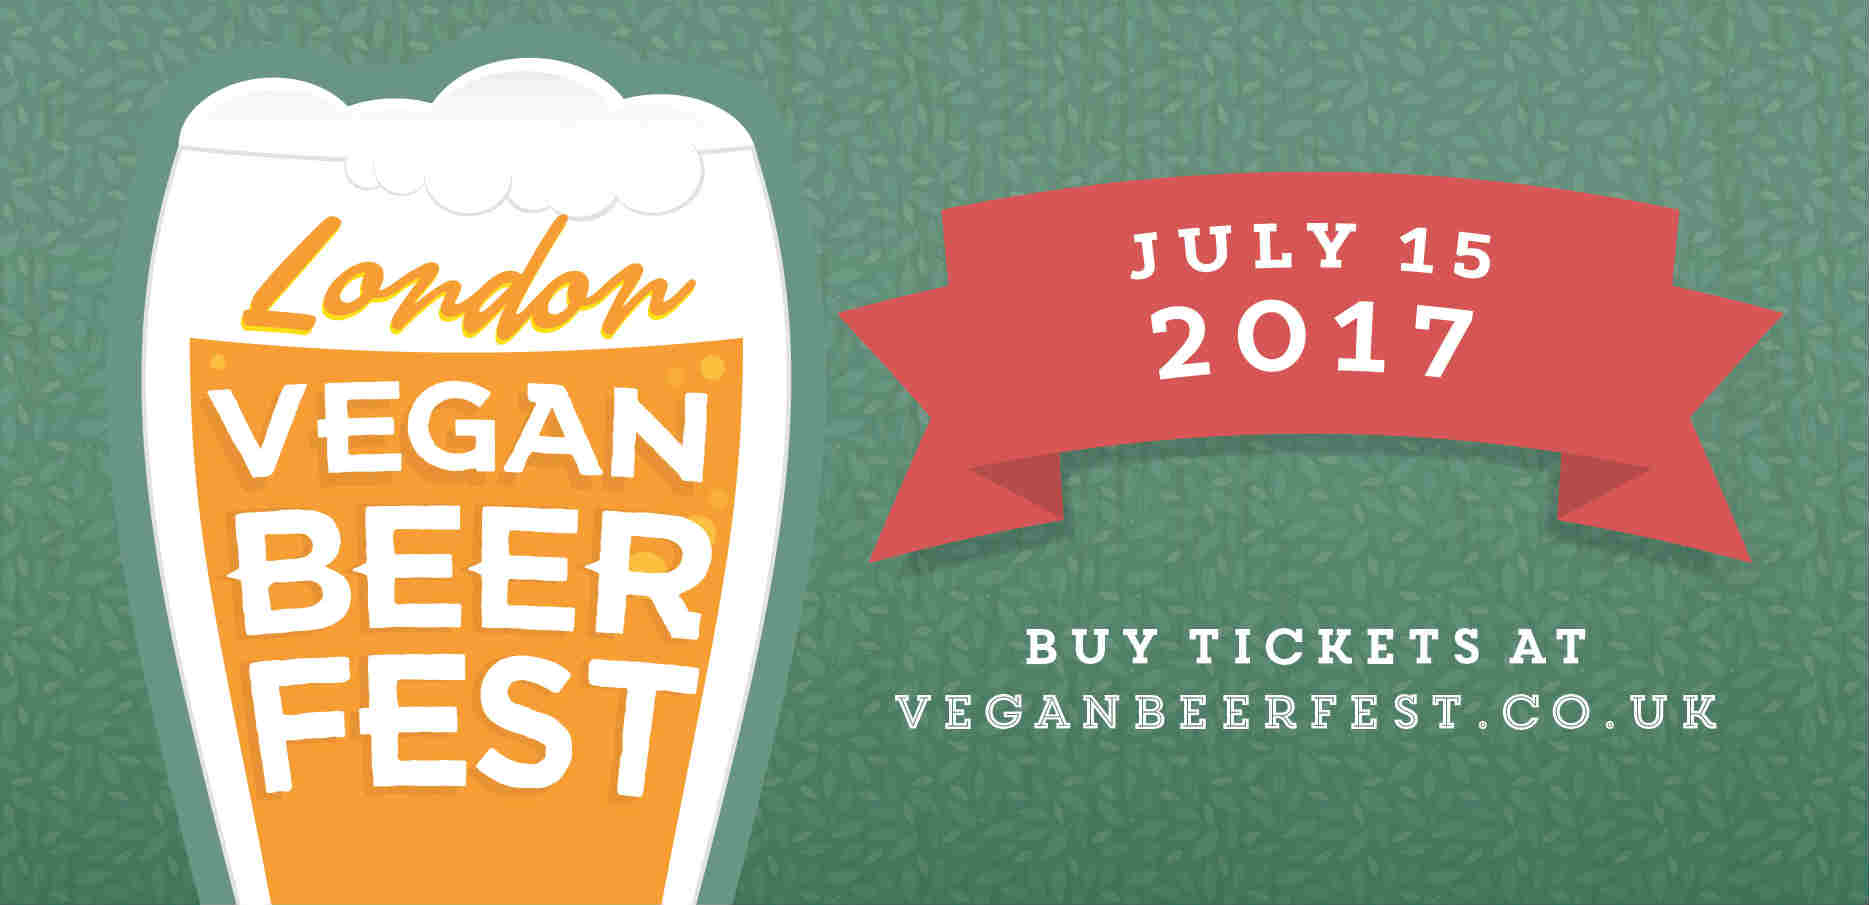 London Vegan Beer Fest is back